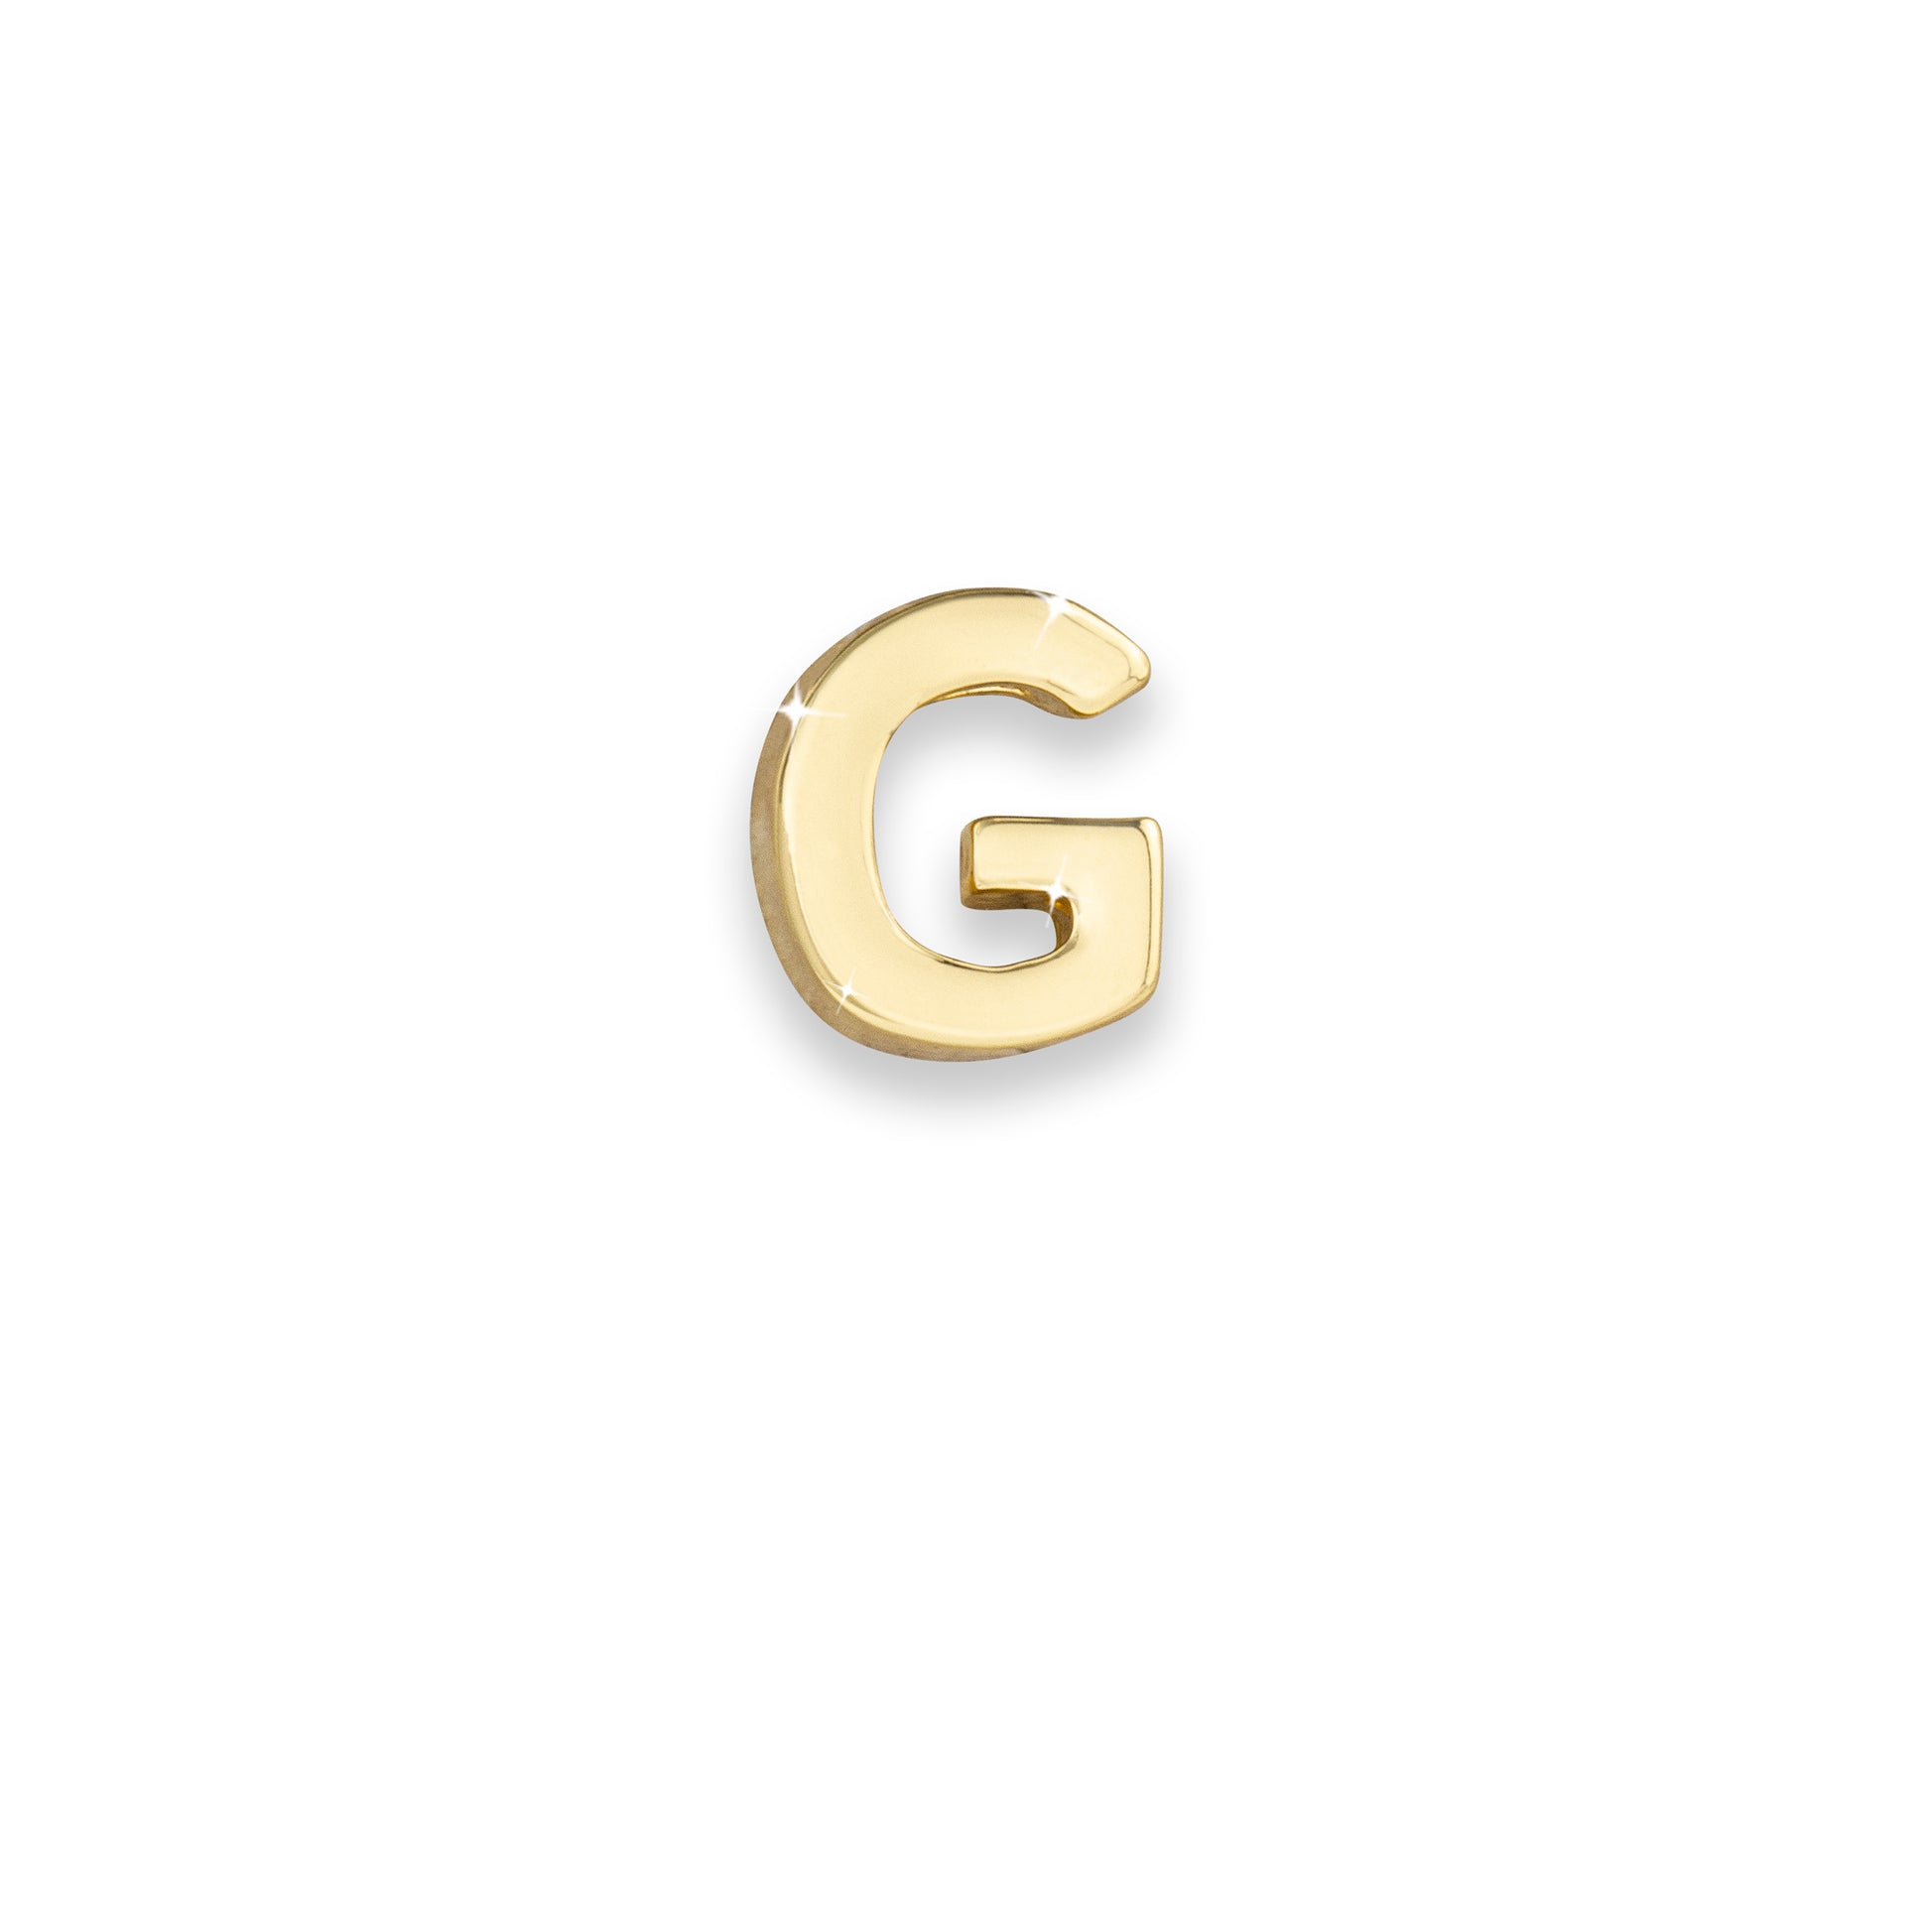 Gold letter G monogram charm for necklaces & bracelets